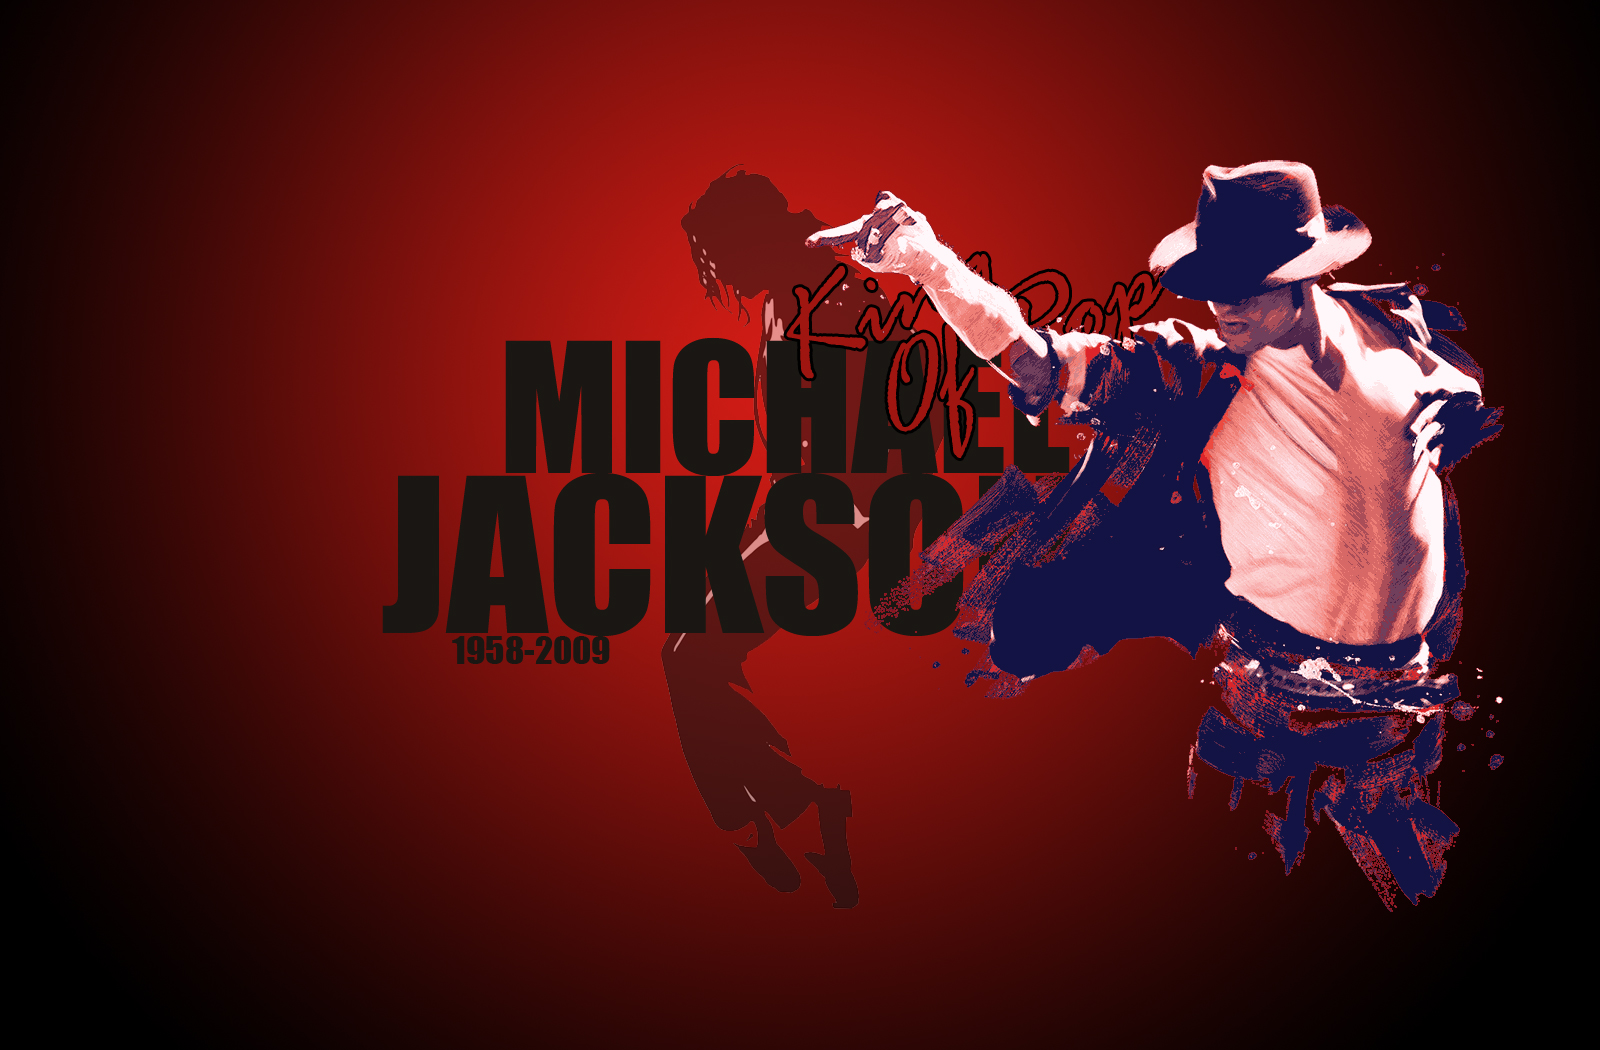 Michael Jackson Wallpapers   Wallpapers for dekstop